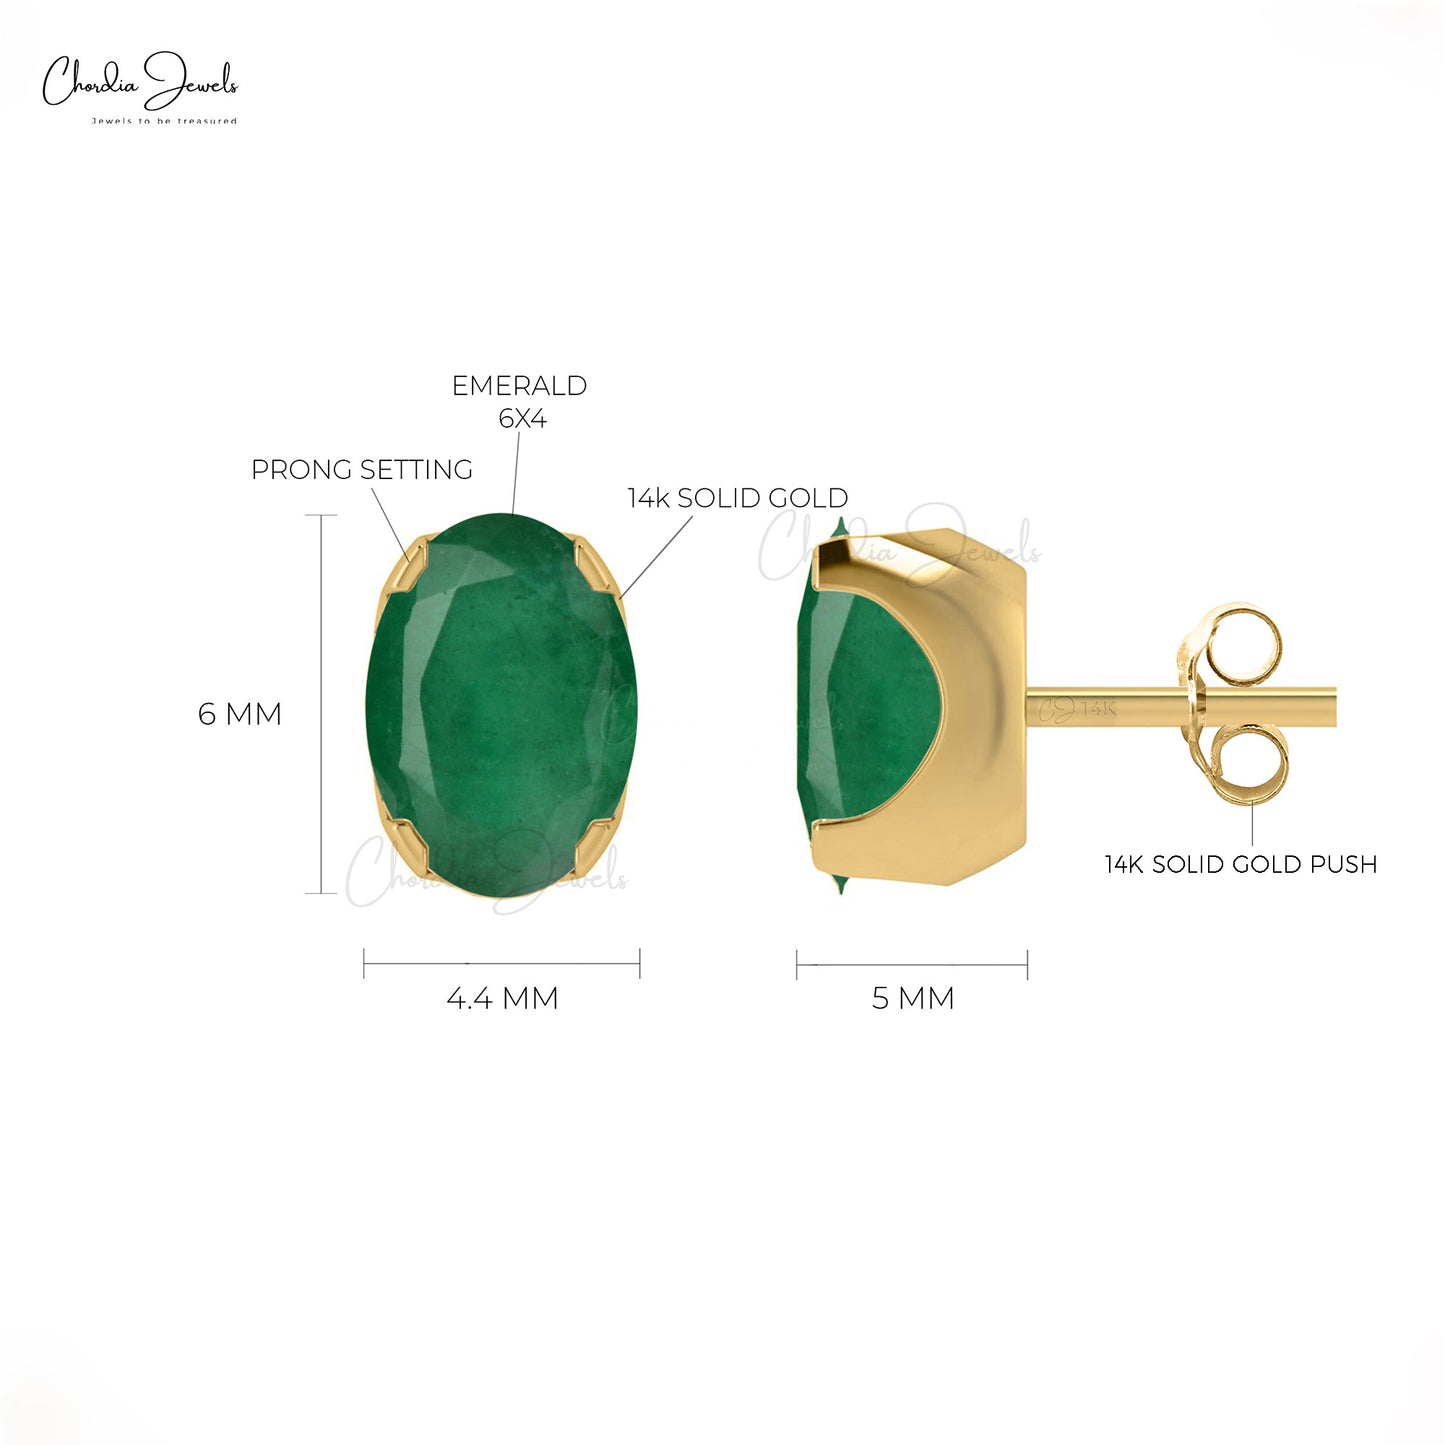 Genuine Emerald Solitaire May Birthstone Studs 14k Real Gold 6x4mm Oval Cut Gemstone Handmade Earrings